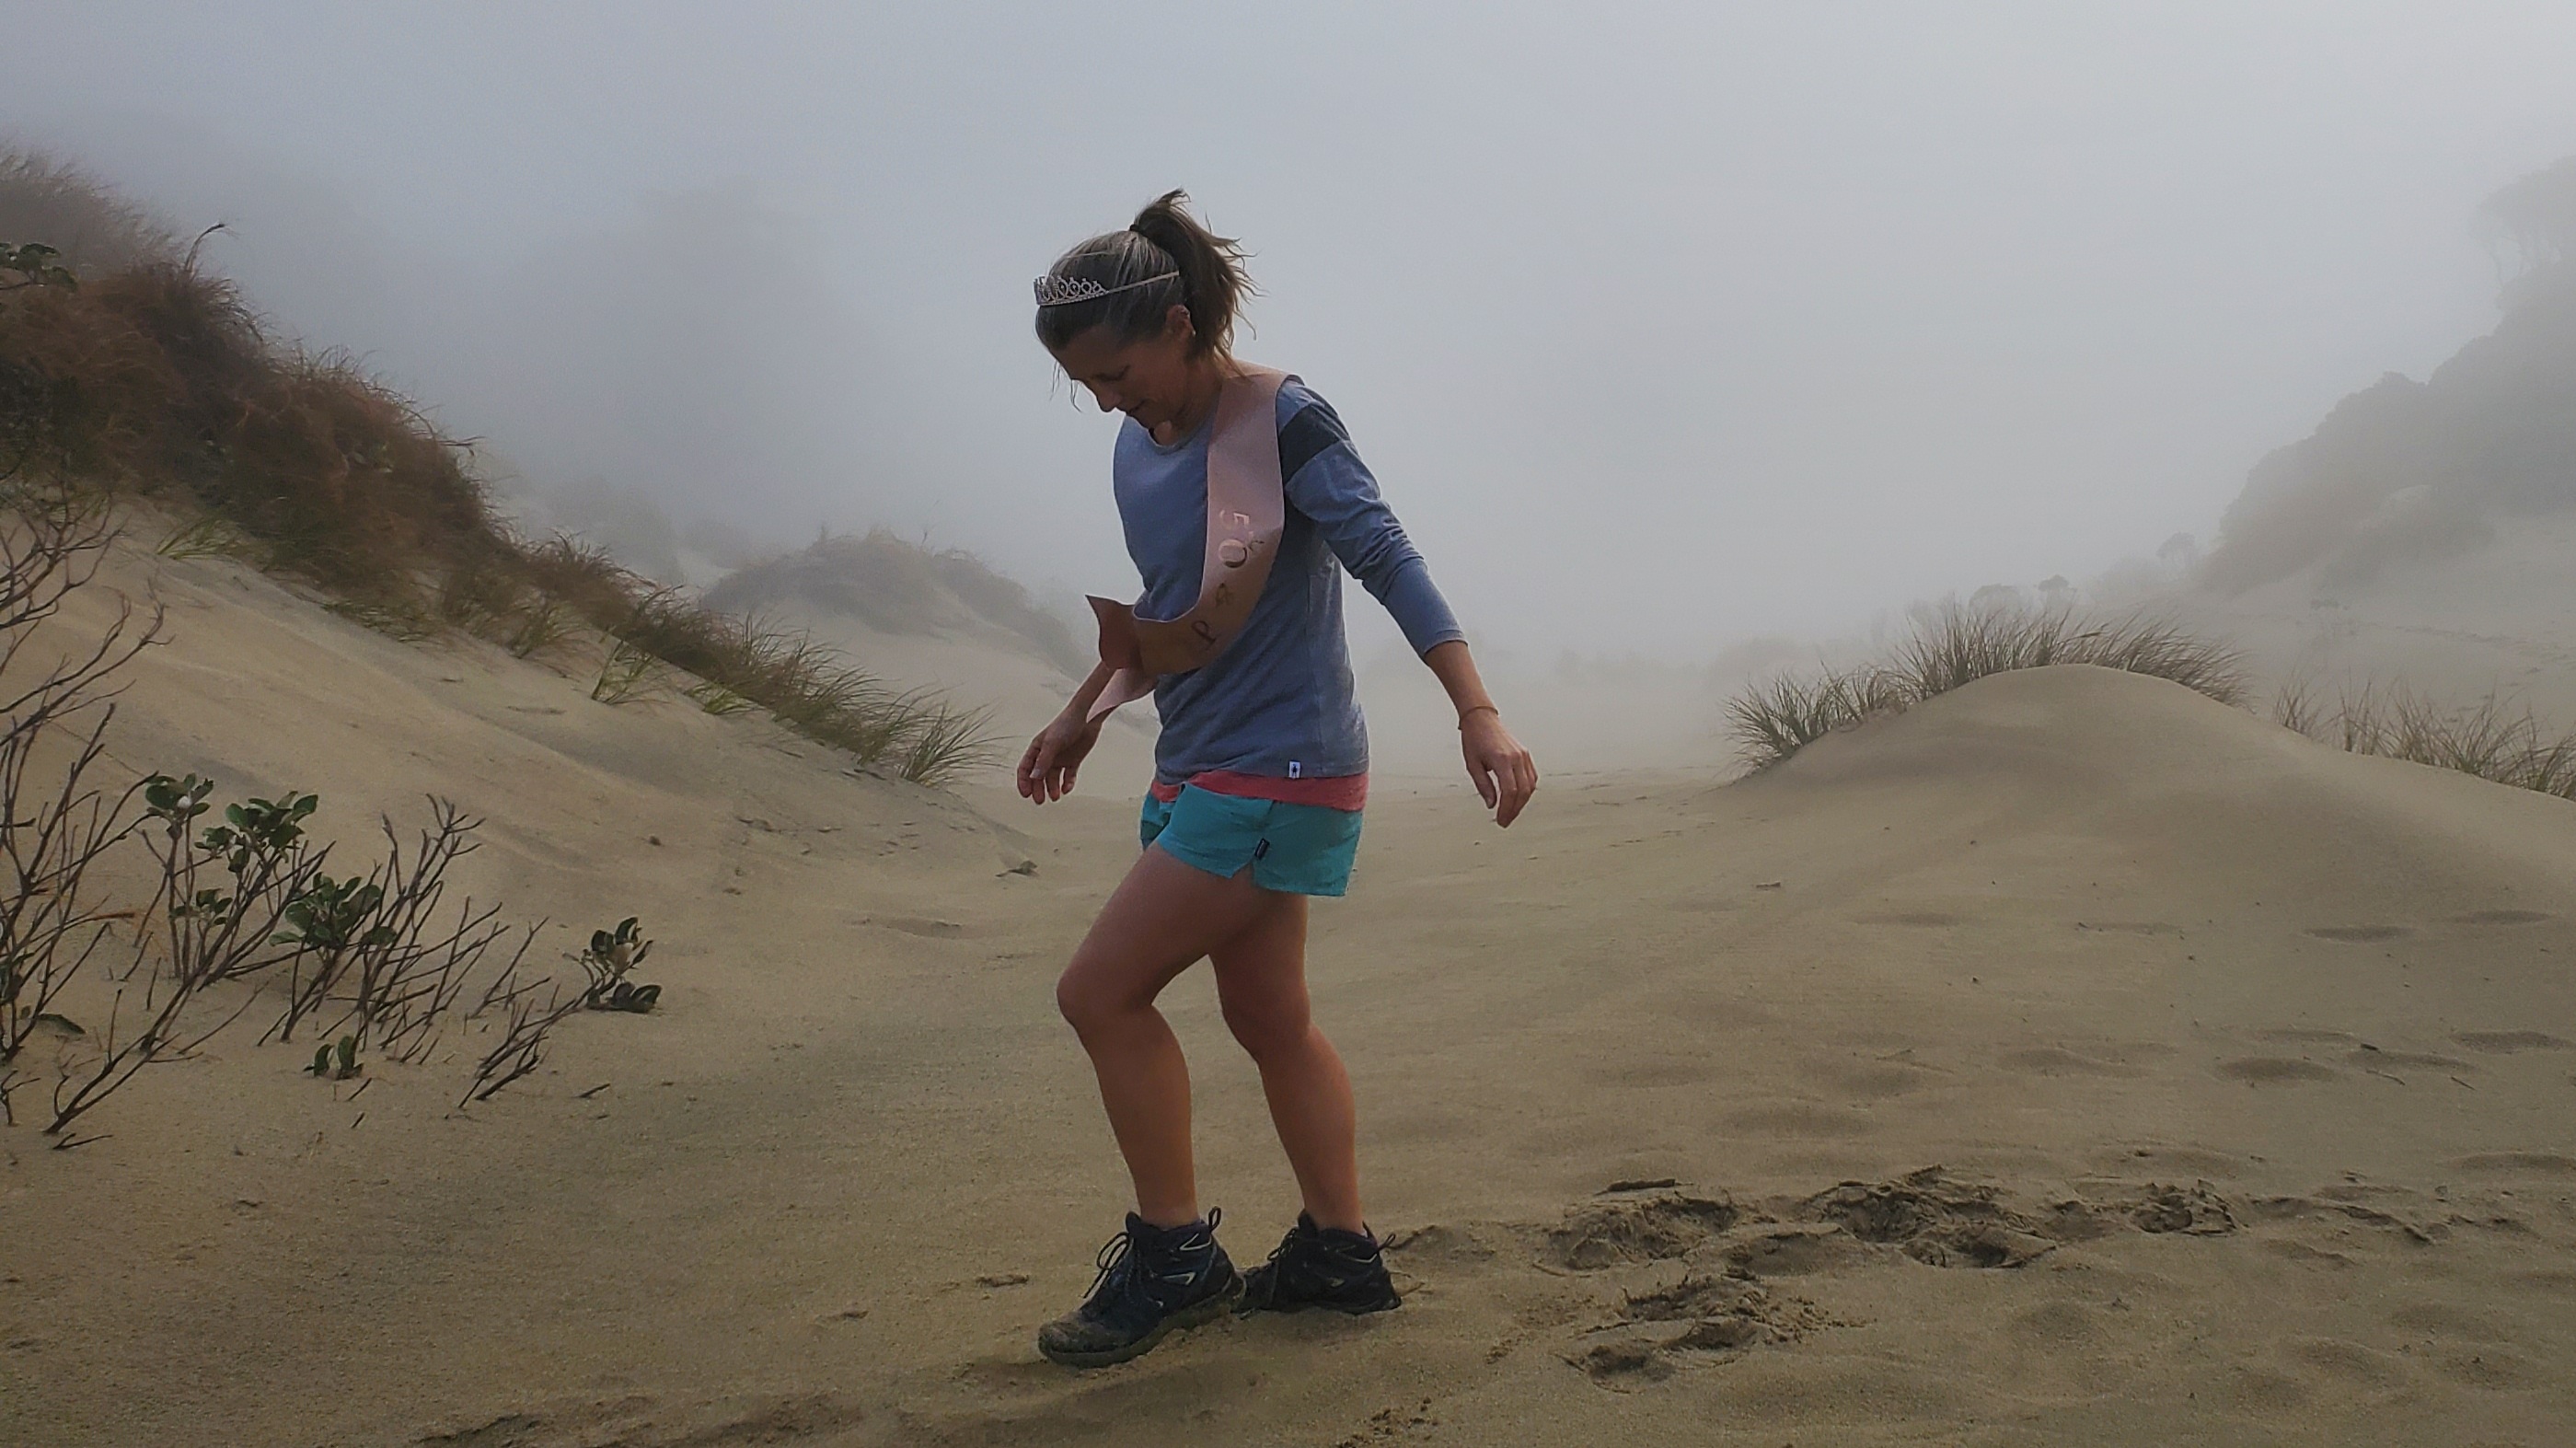 Fiftieth Birthday kiwi spotting on Big Hellfire dunes